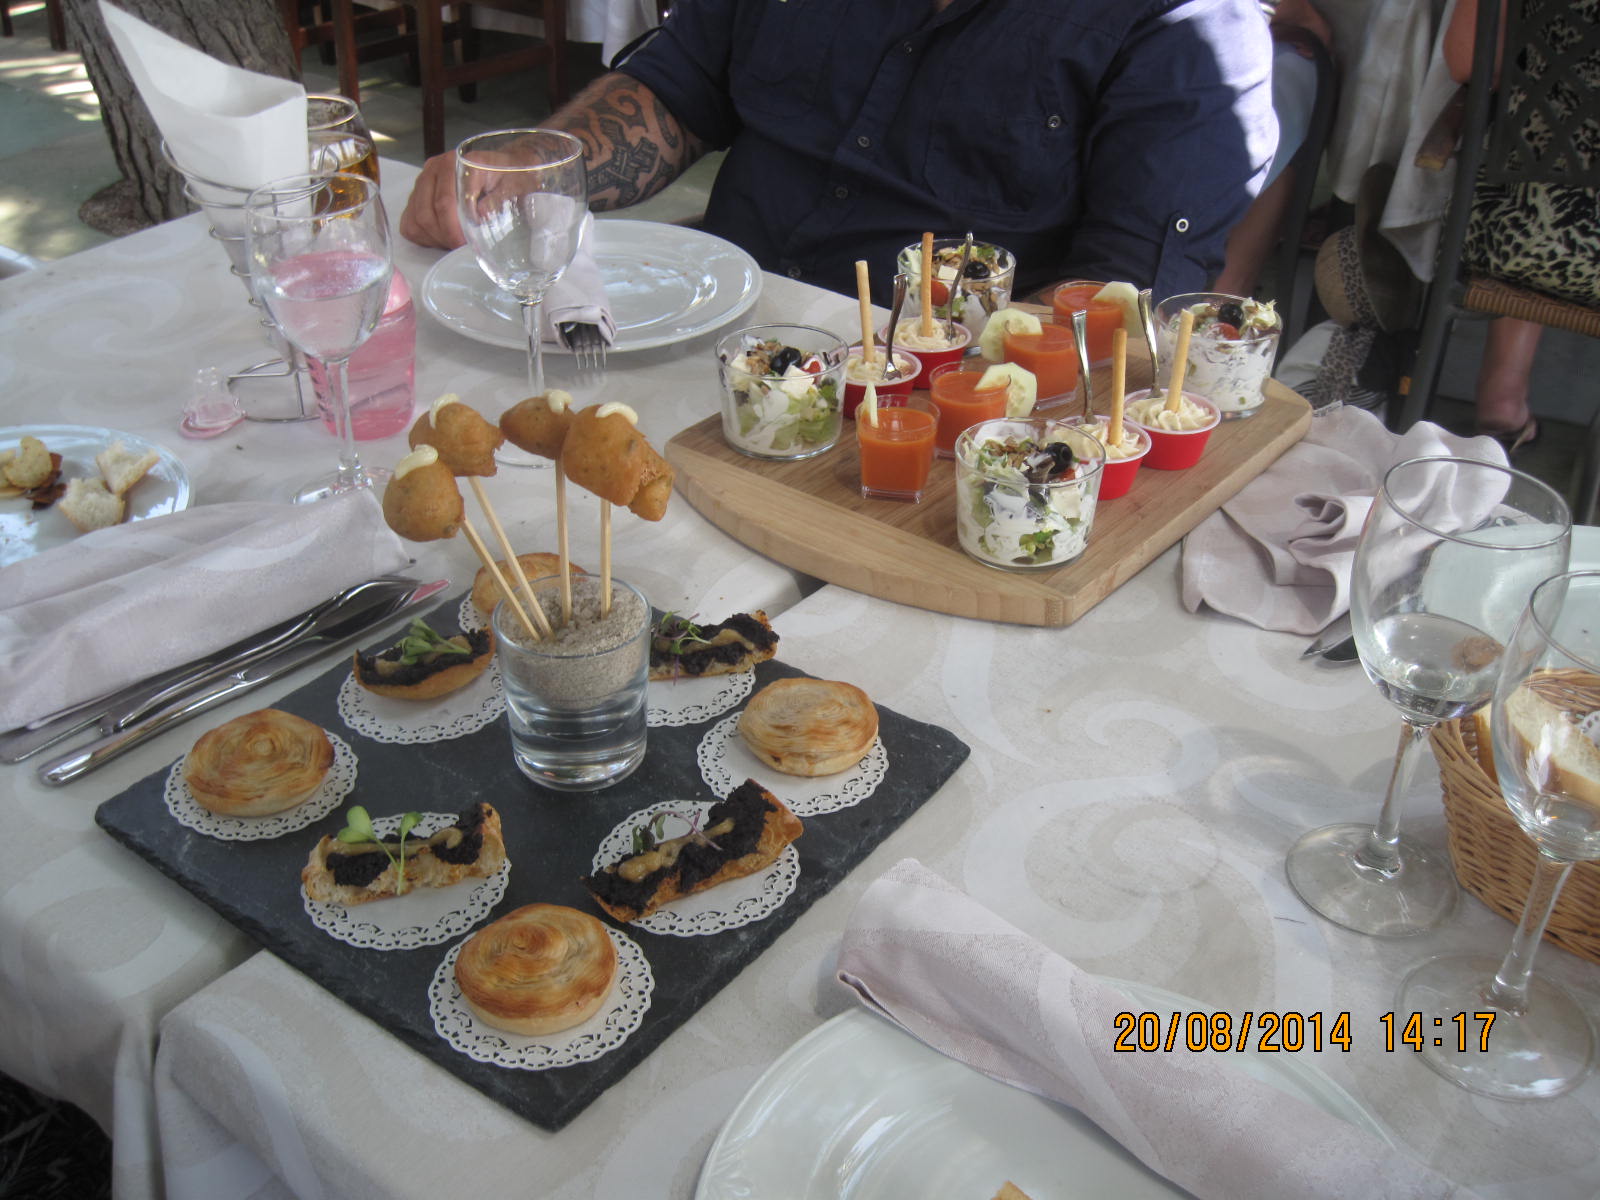 Restaurant Review: Rebate, Alicante Province